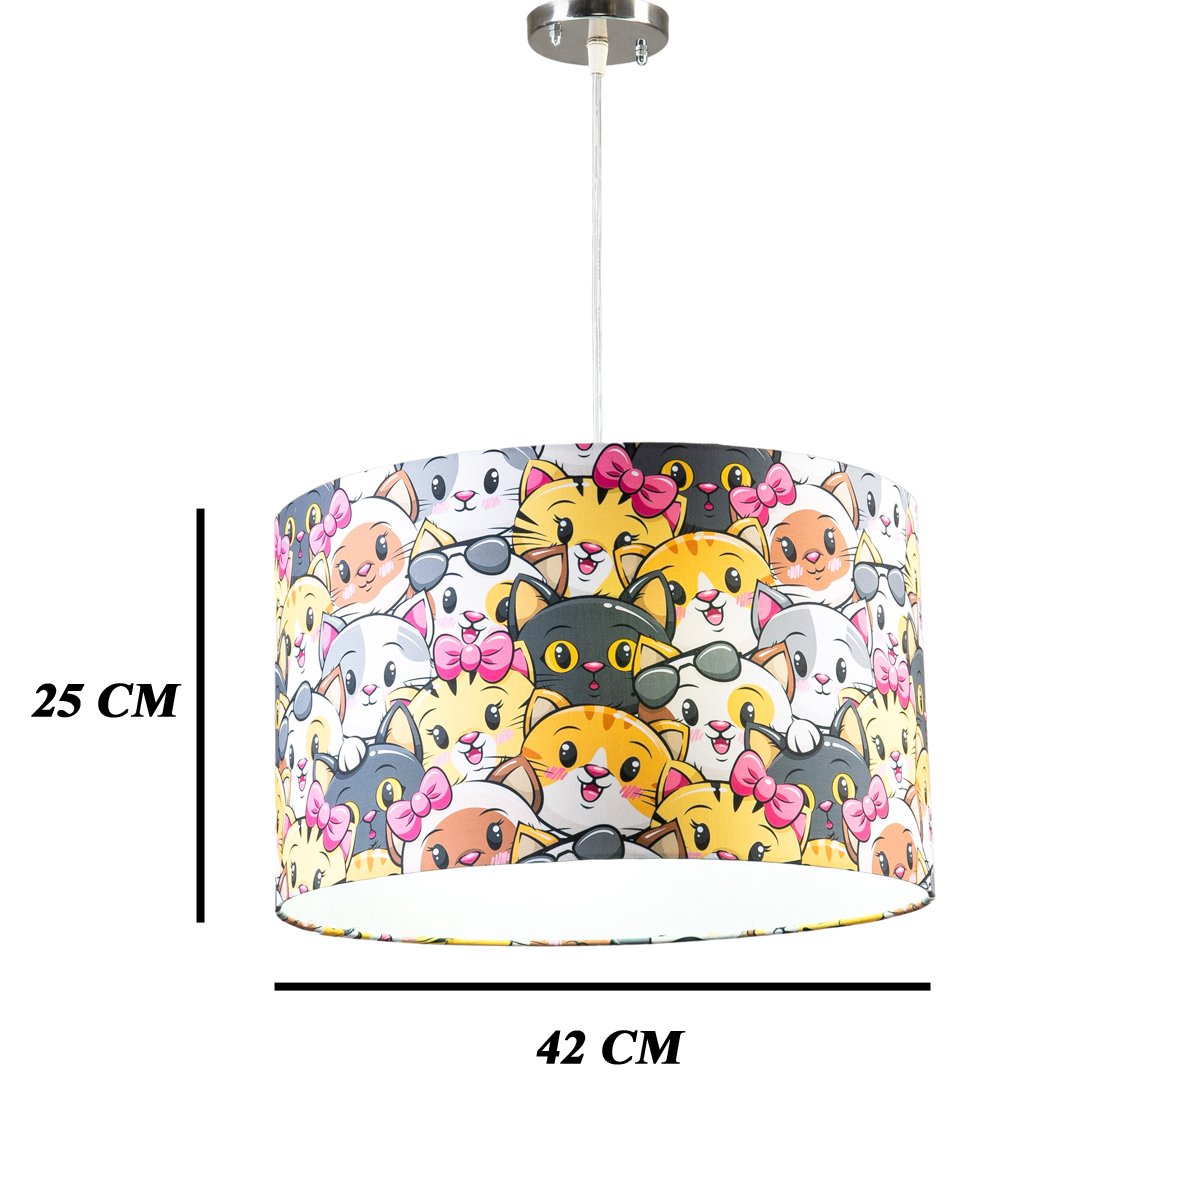 Ceiling lamp - mnta018